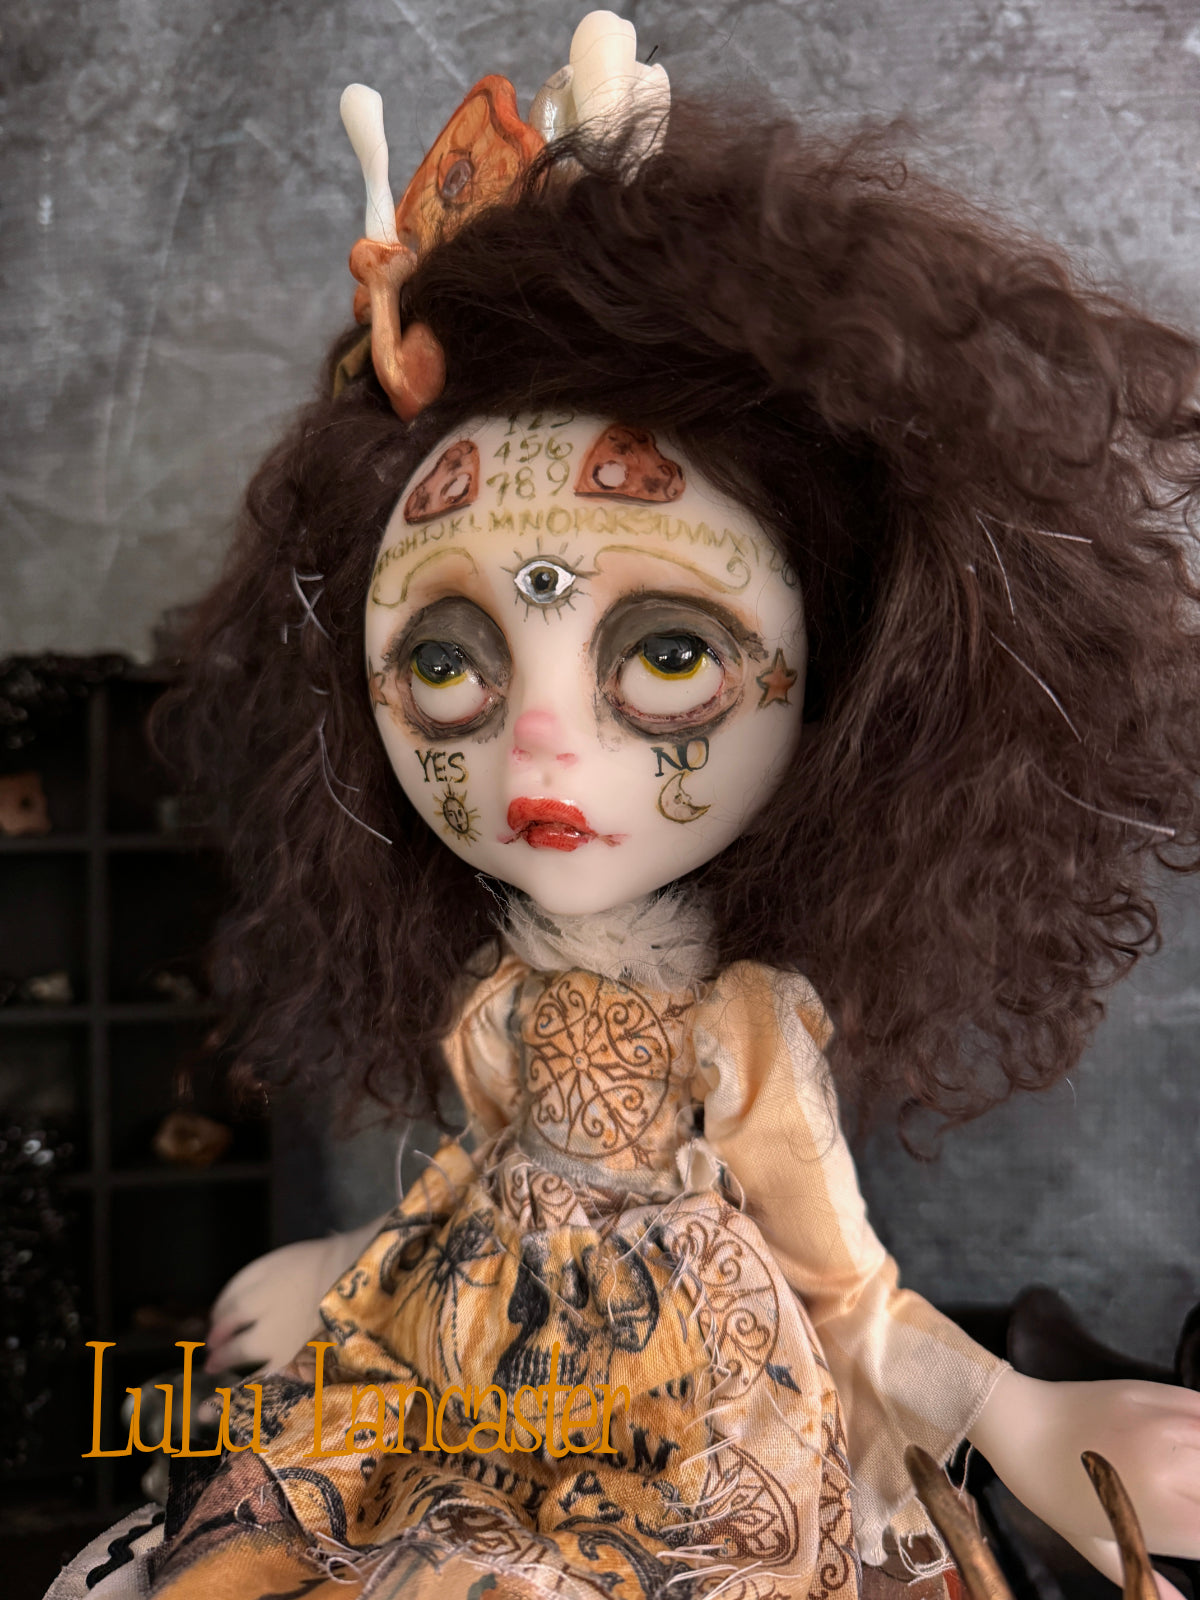 Wilmot ouija witches words~ Original LuLu Lancaster Art Doll